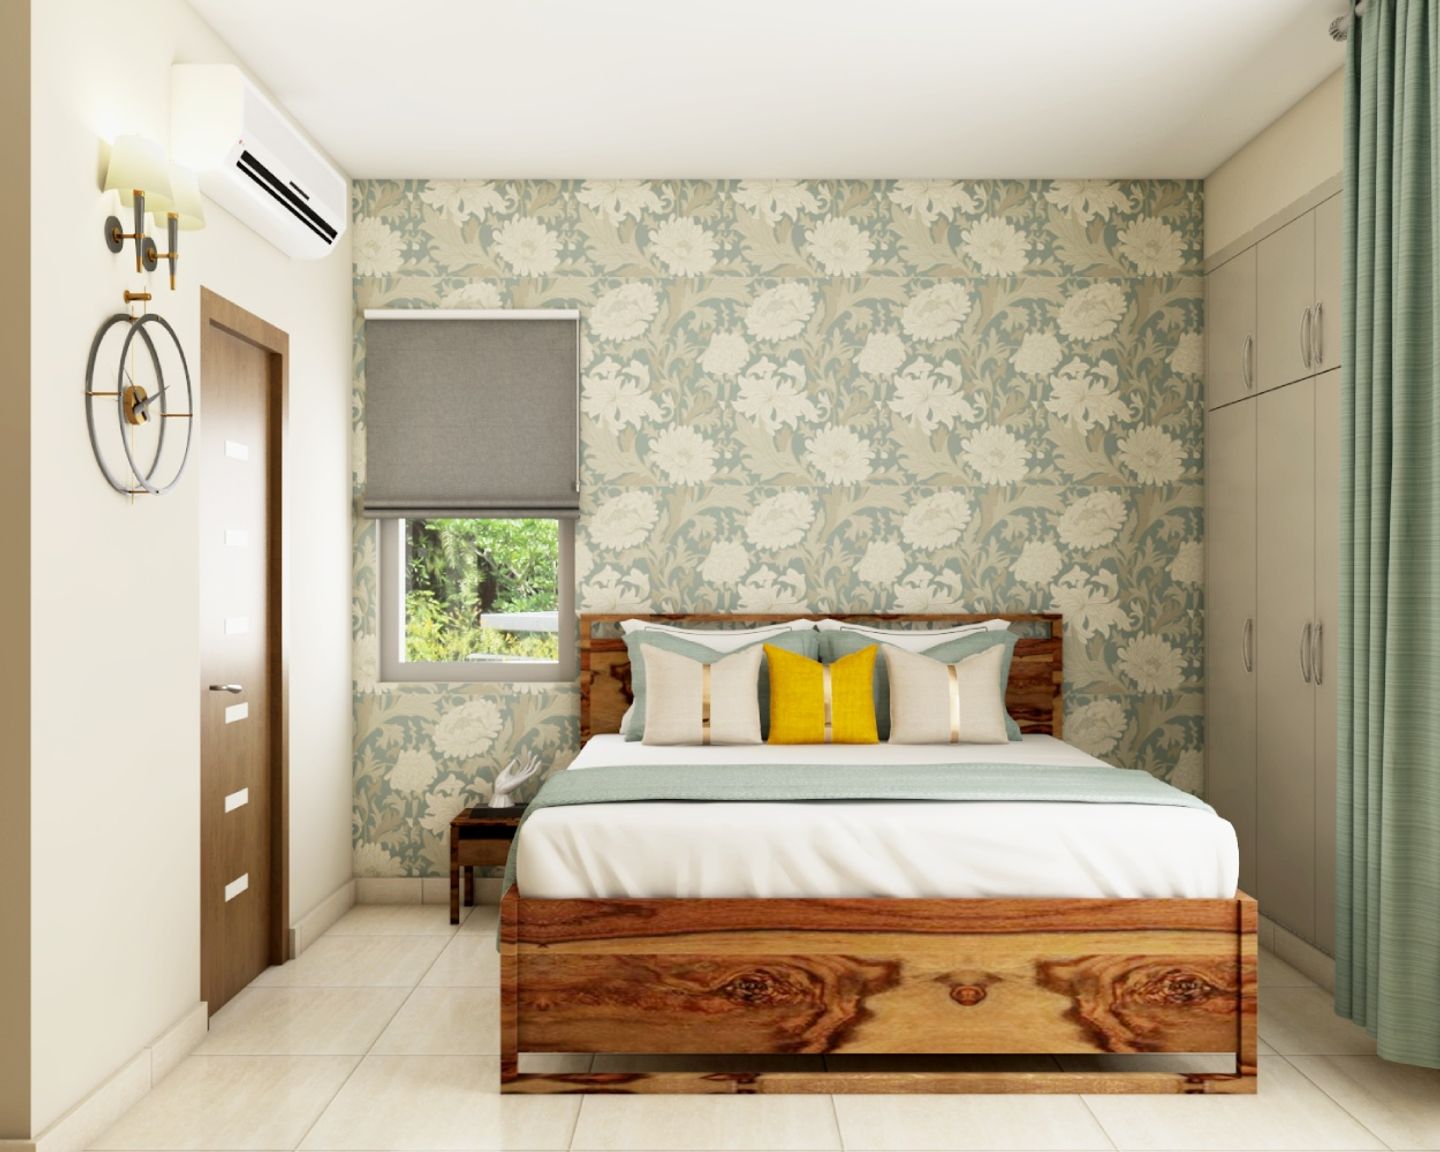 Bedroom Wallpaper Design With Tropical Motifs - Livspace